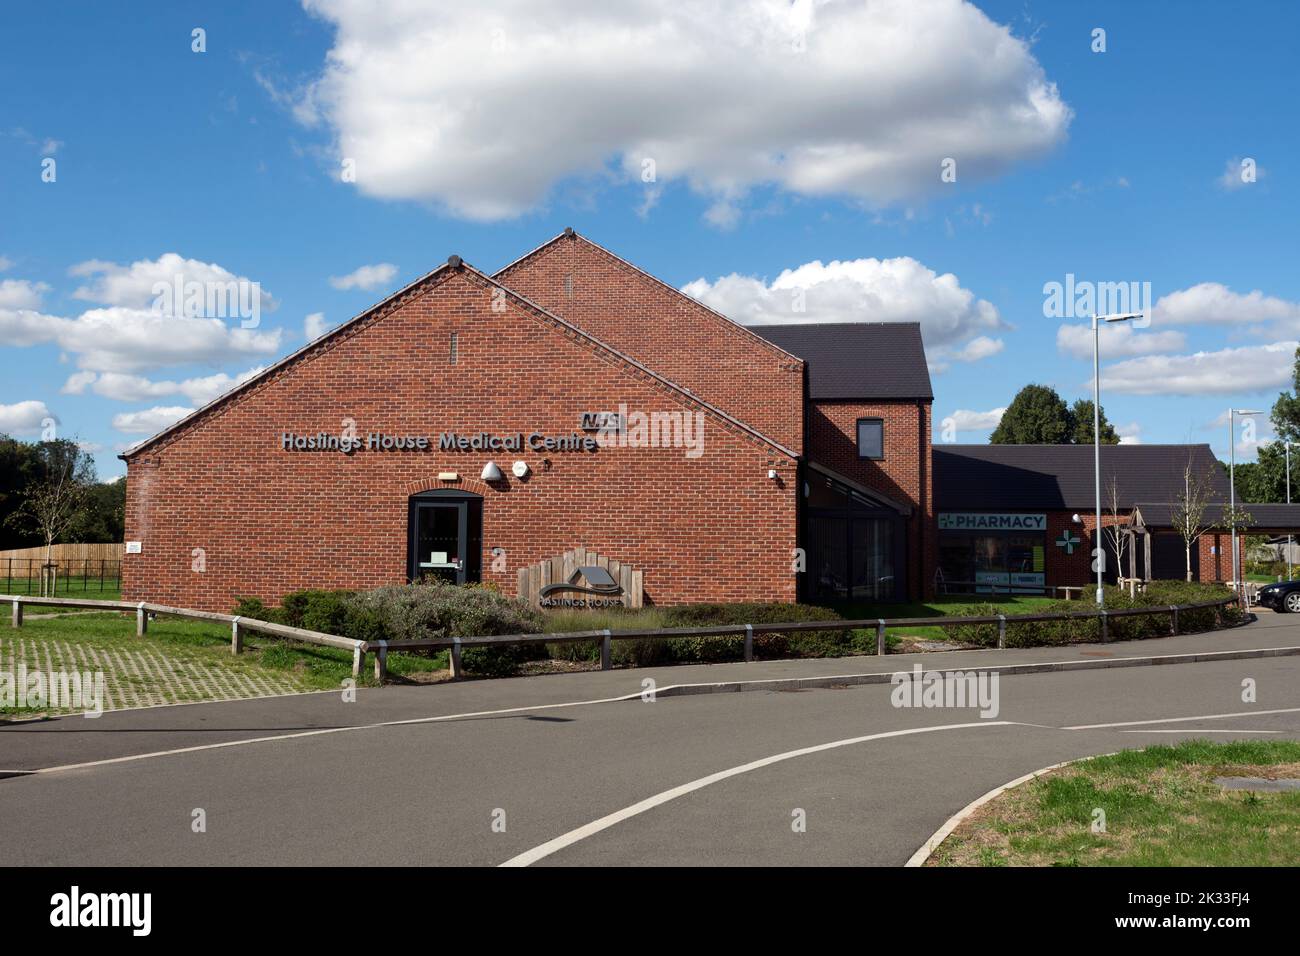 Hastings House Medical Centre, Wellesbourne, Warwickshire, Inglaterra, Reino Unido Foto de stock